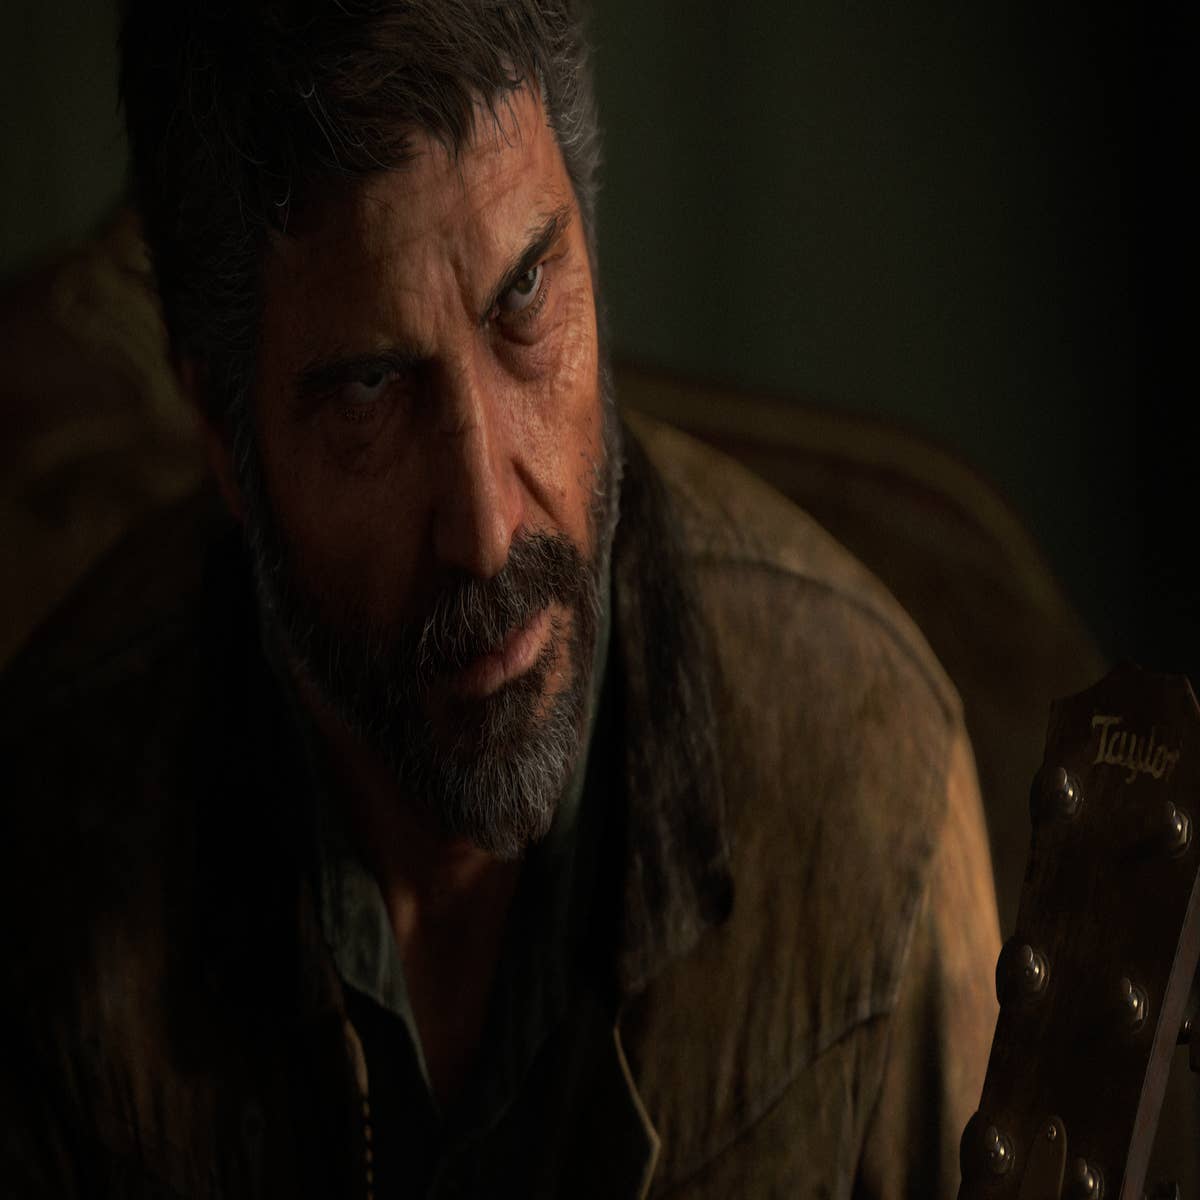 Análise: The Last of Us Part II (PS4) é uma história brutal sobre